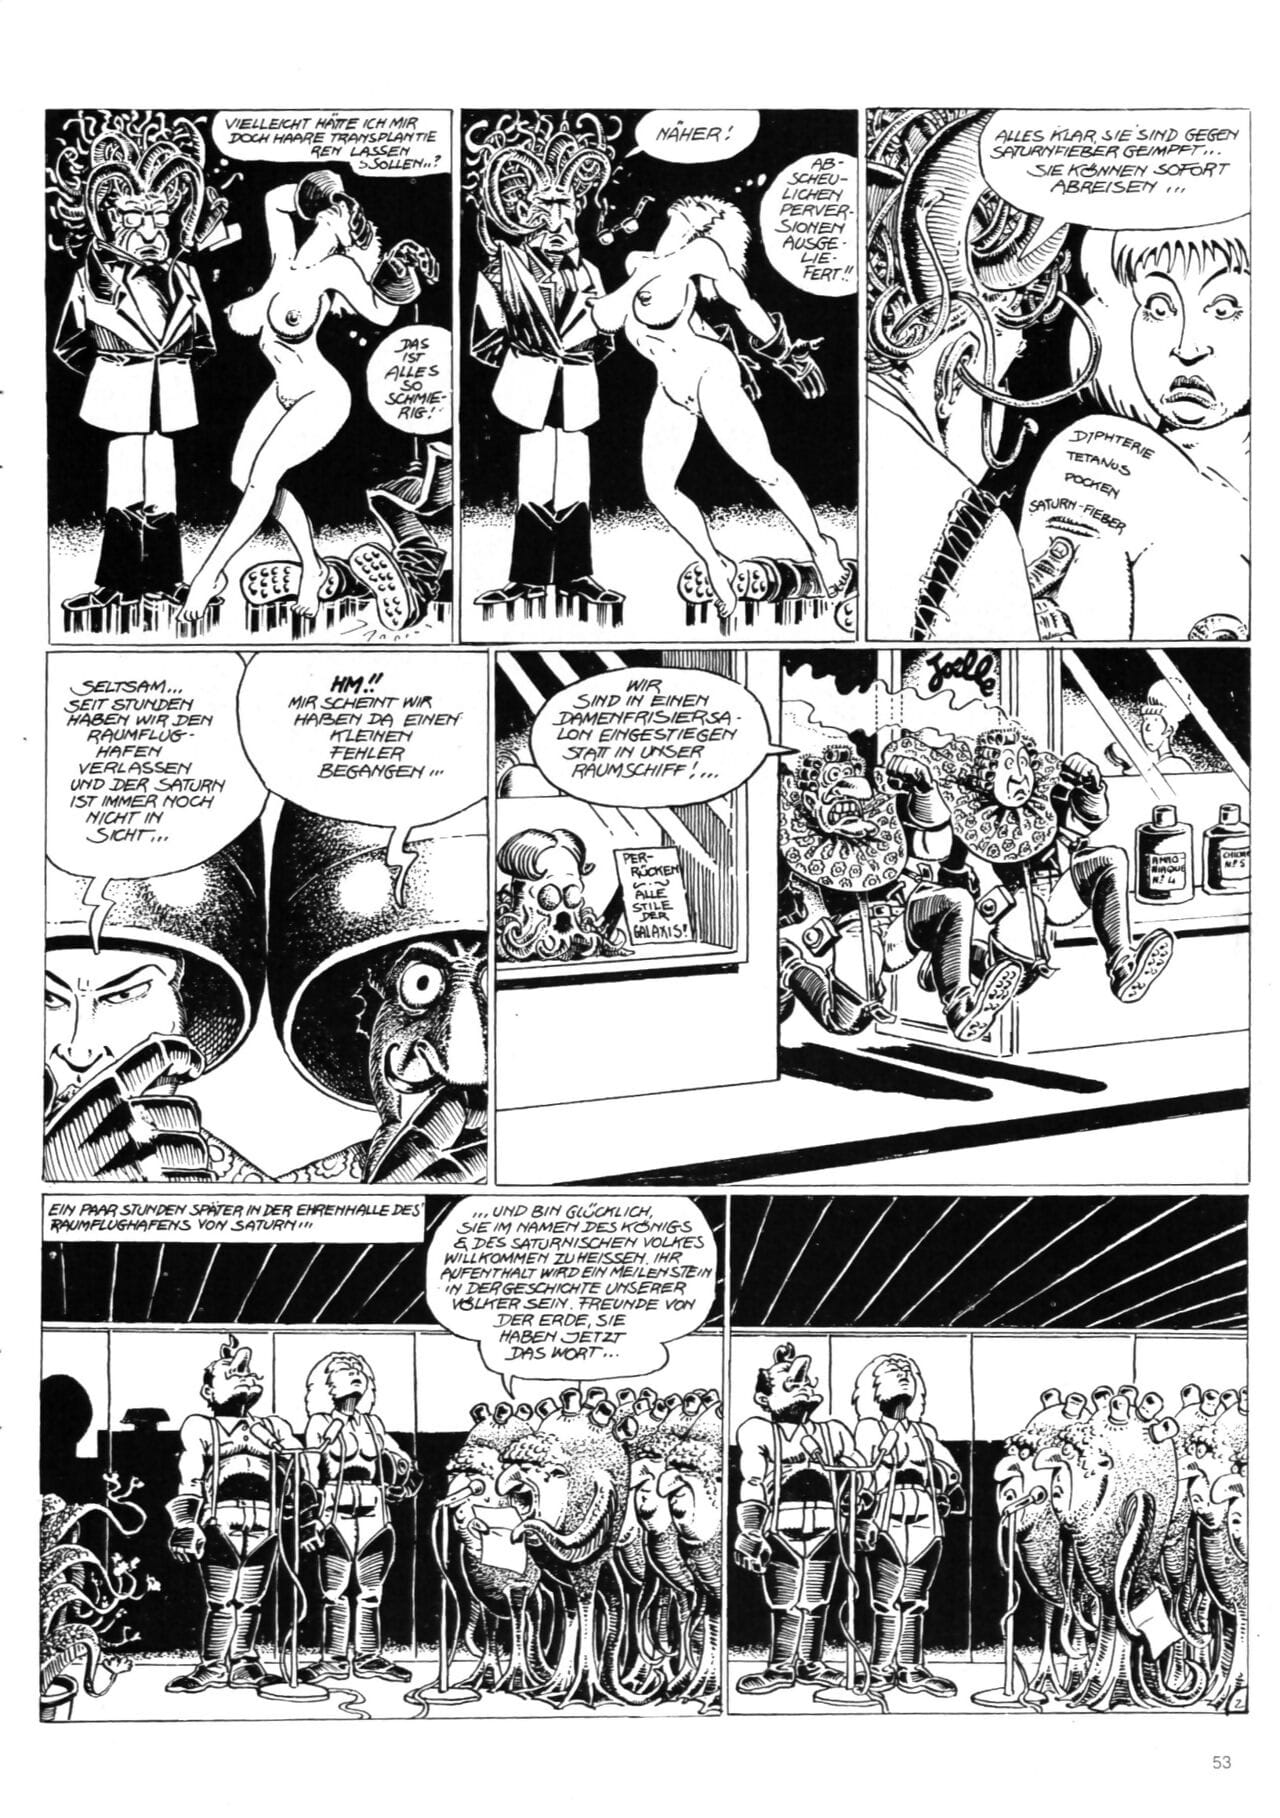 Schwermetall #013 - part 3 page 1